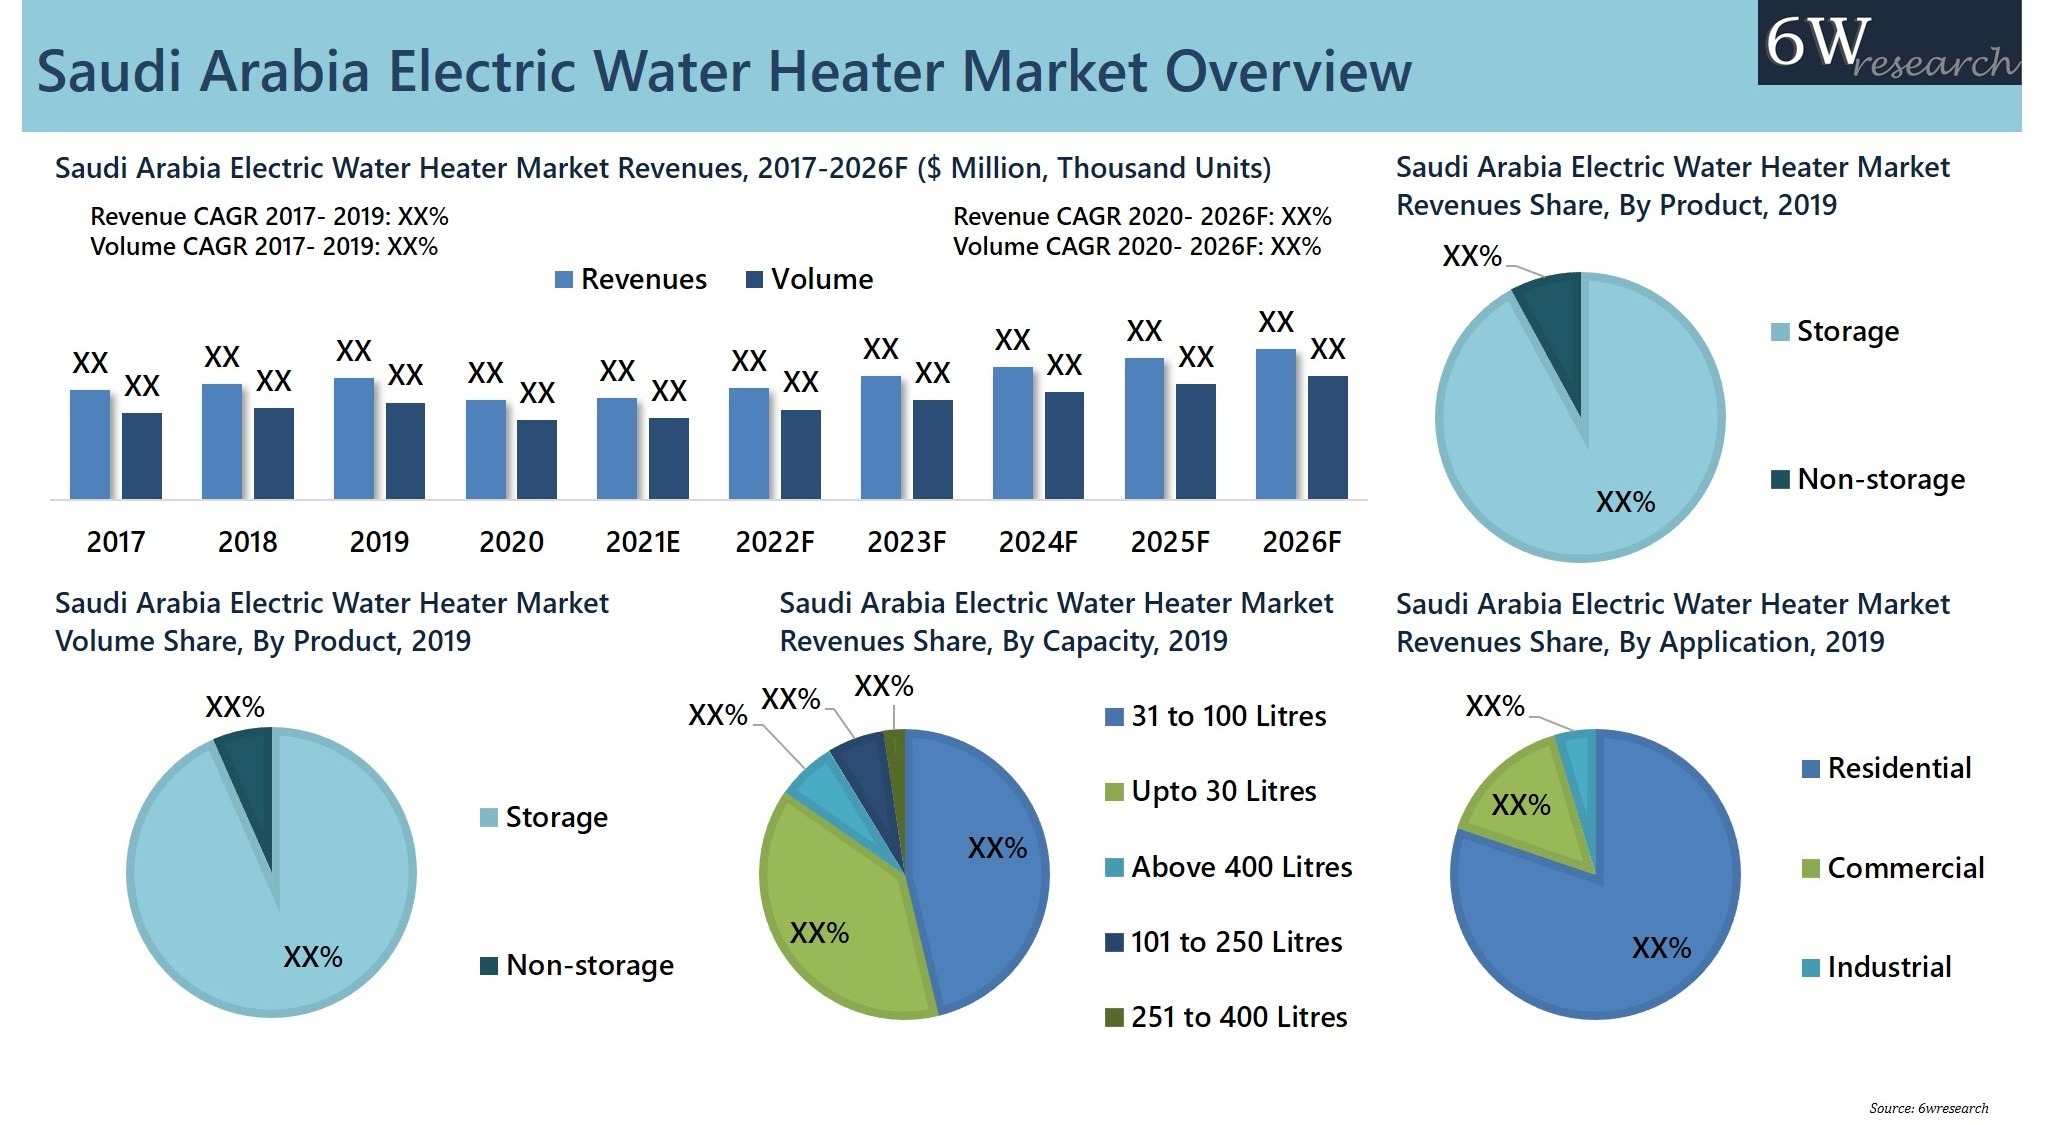 Saudi Arabia Electric Water Heater Market